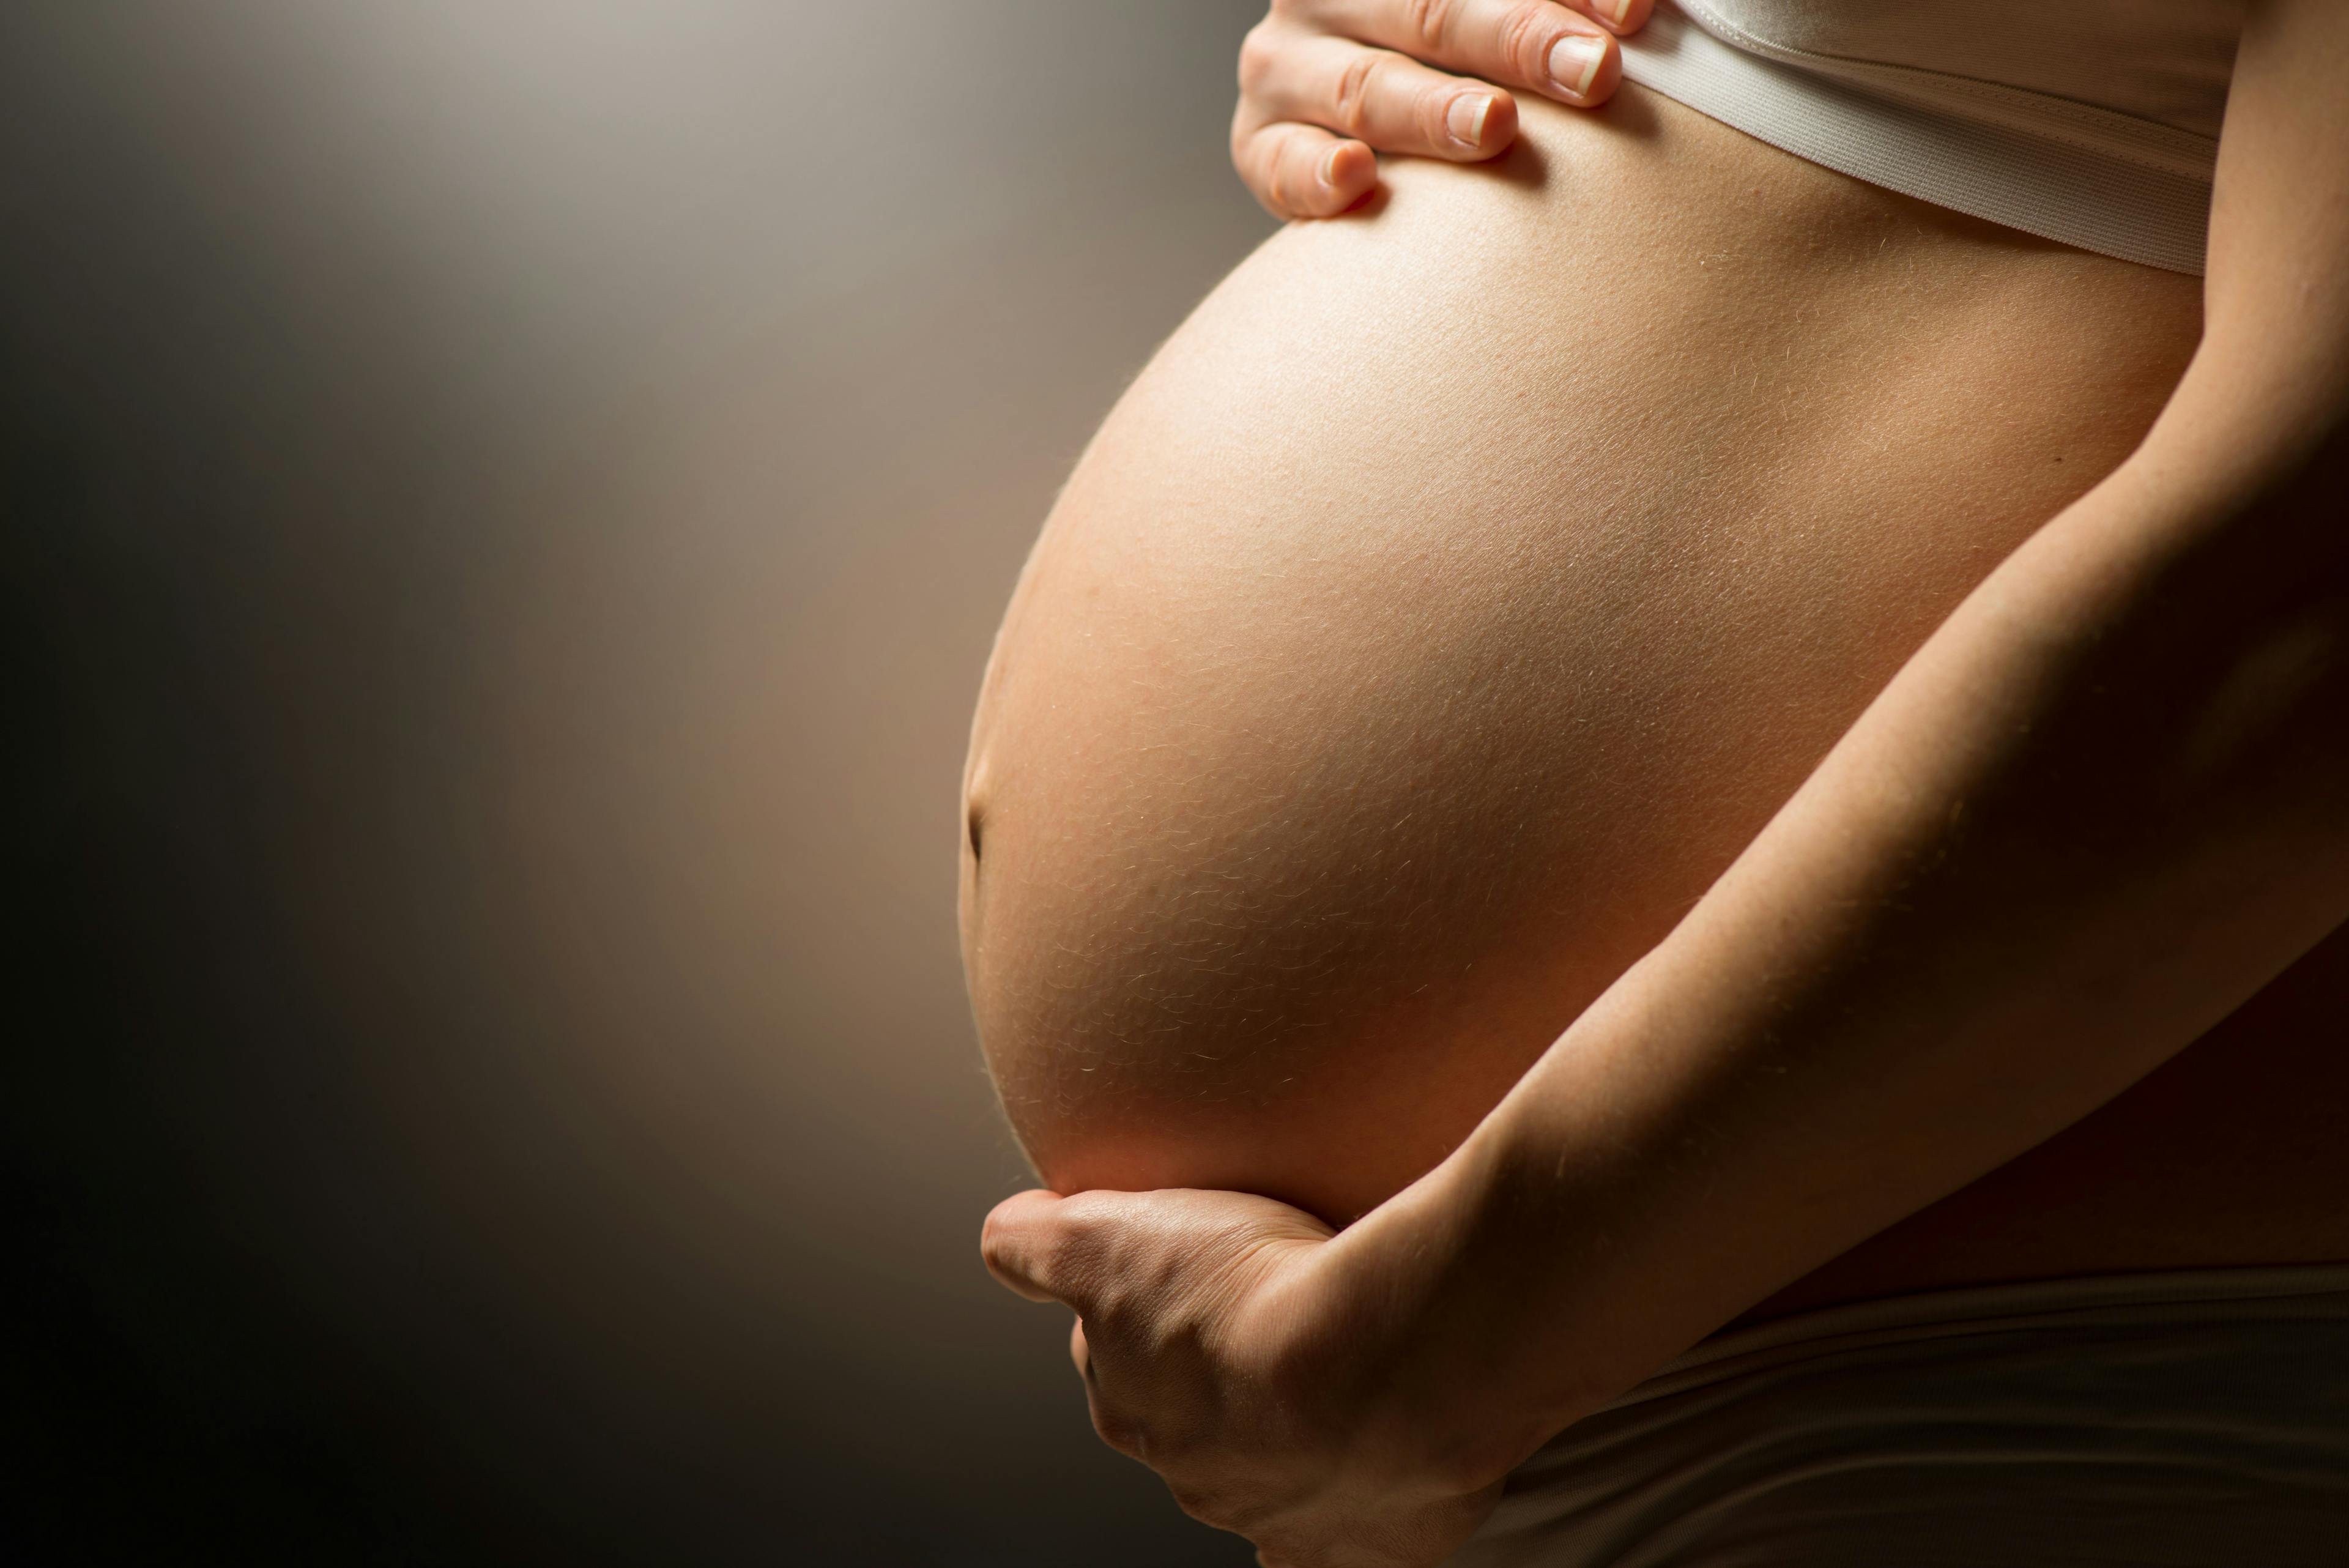 HBsAg-positive status, excessive gestational weight gain risk factors for gestational diabetes mellitus